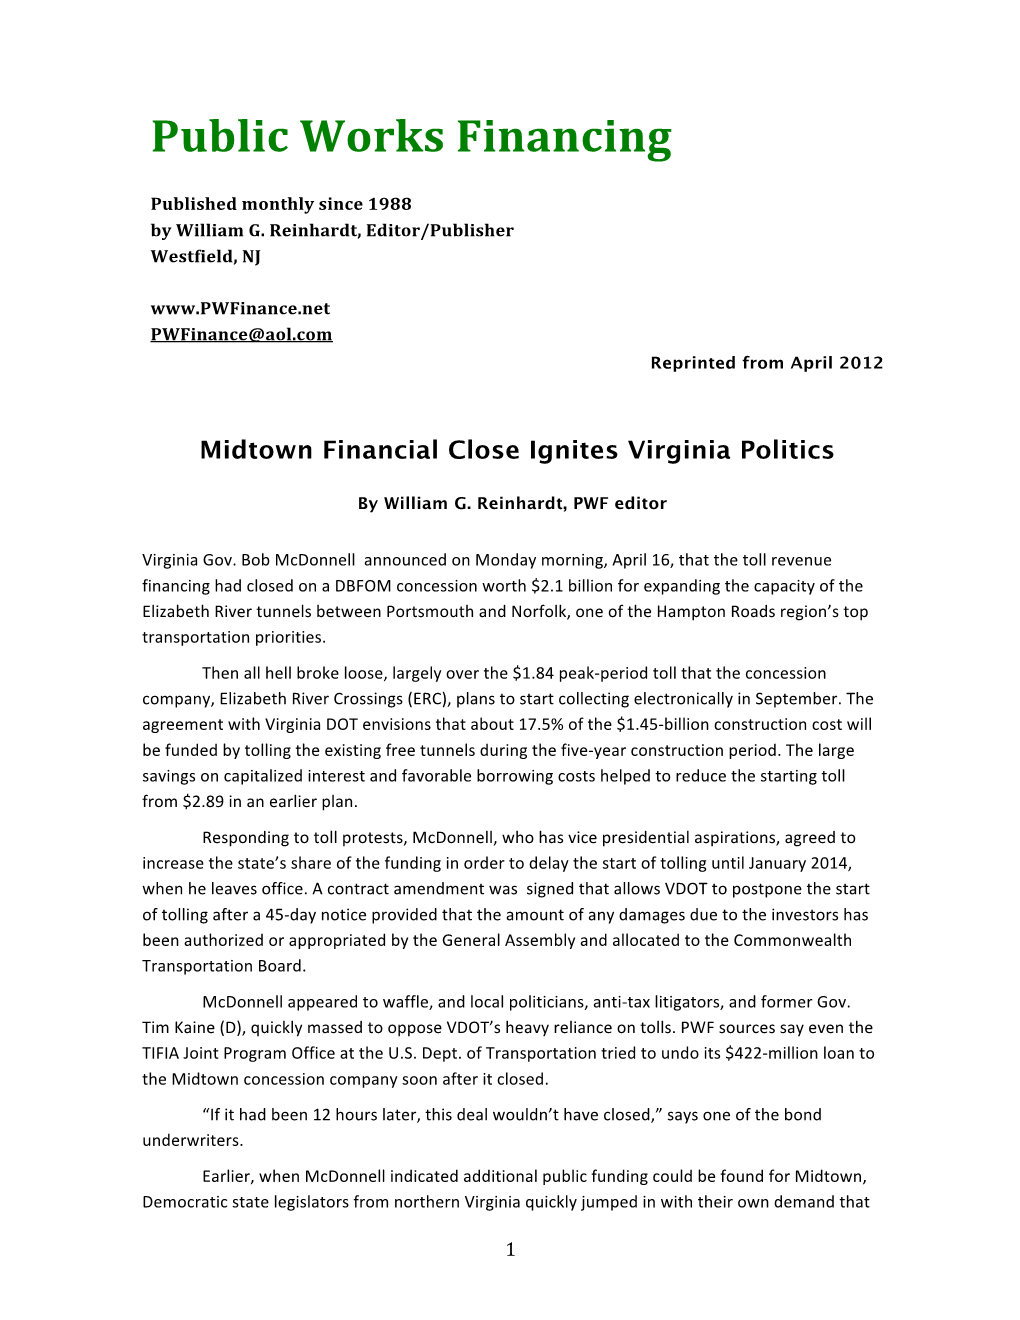 Midtown Tunnel Financial Close Ignites Virginia Toll Politics